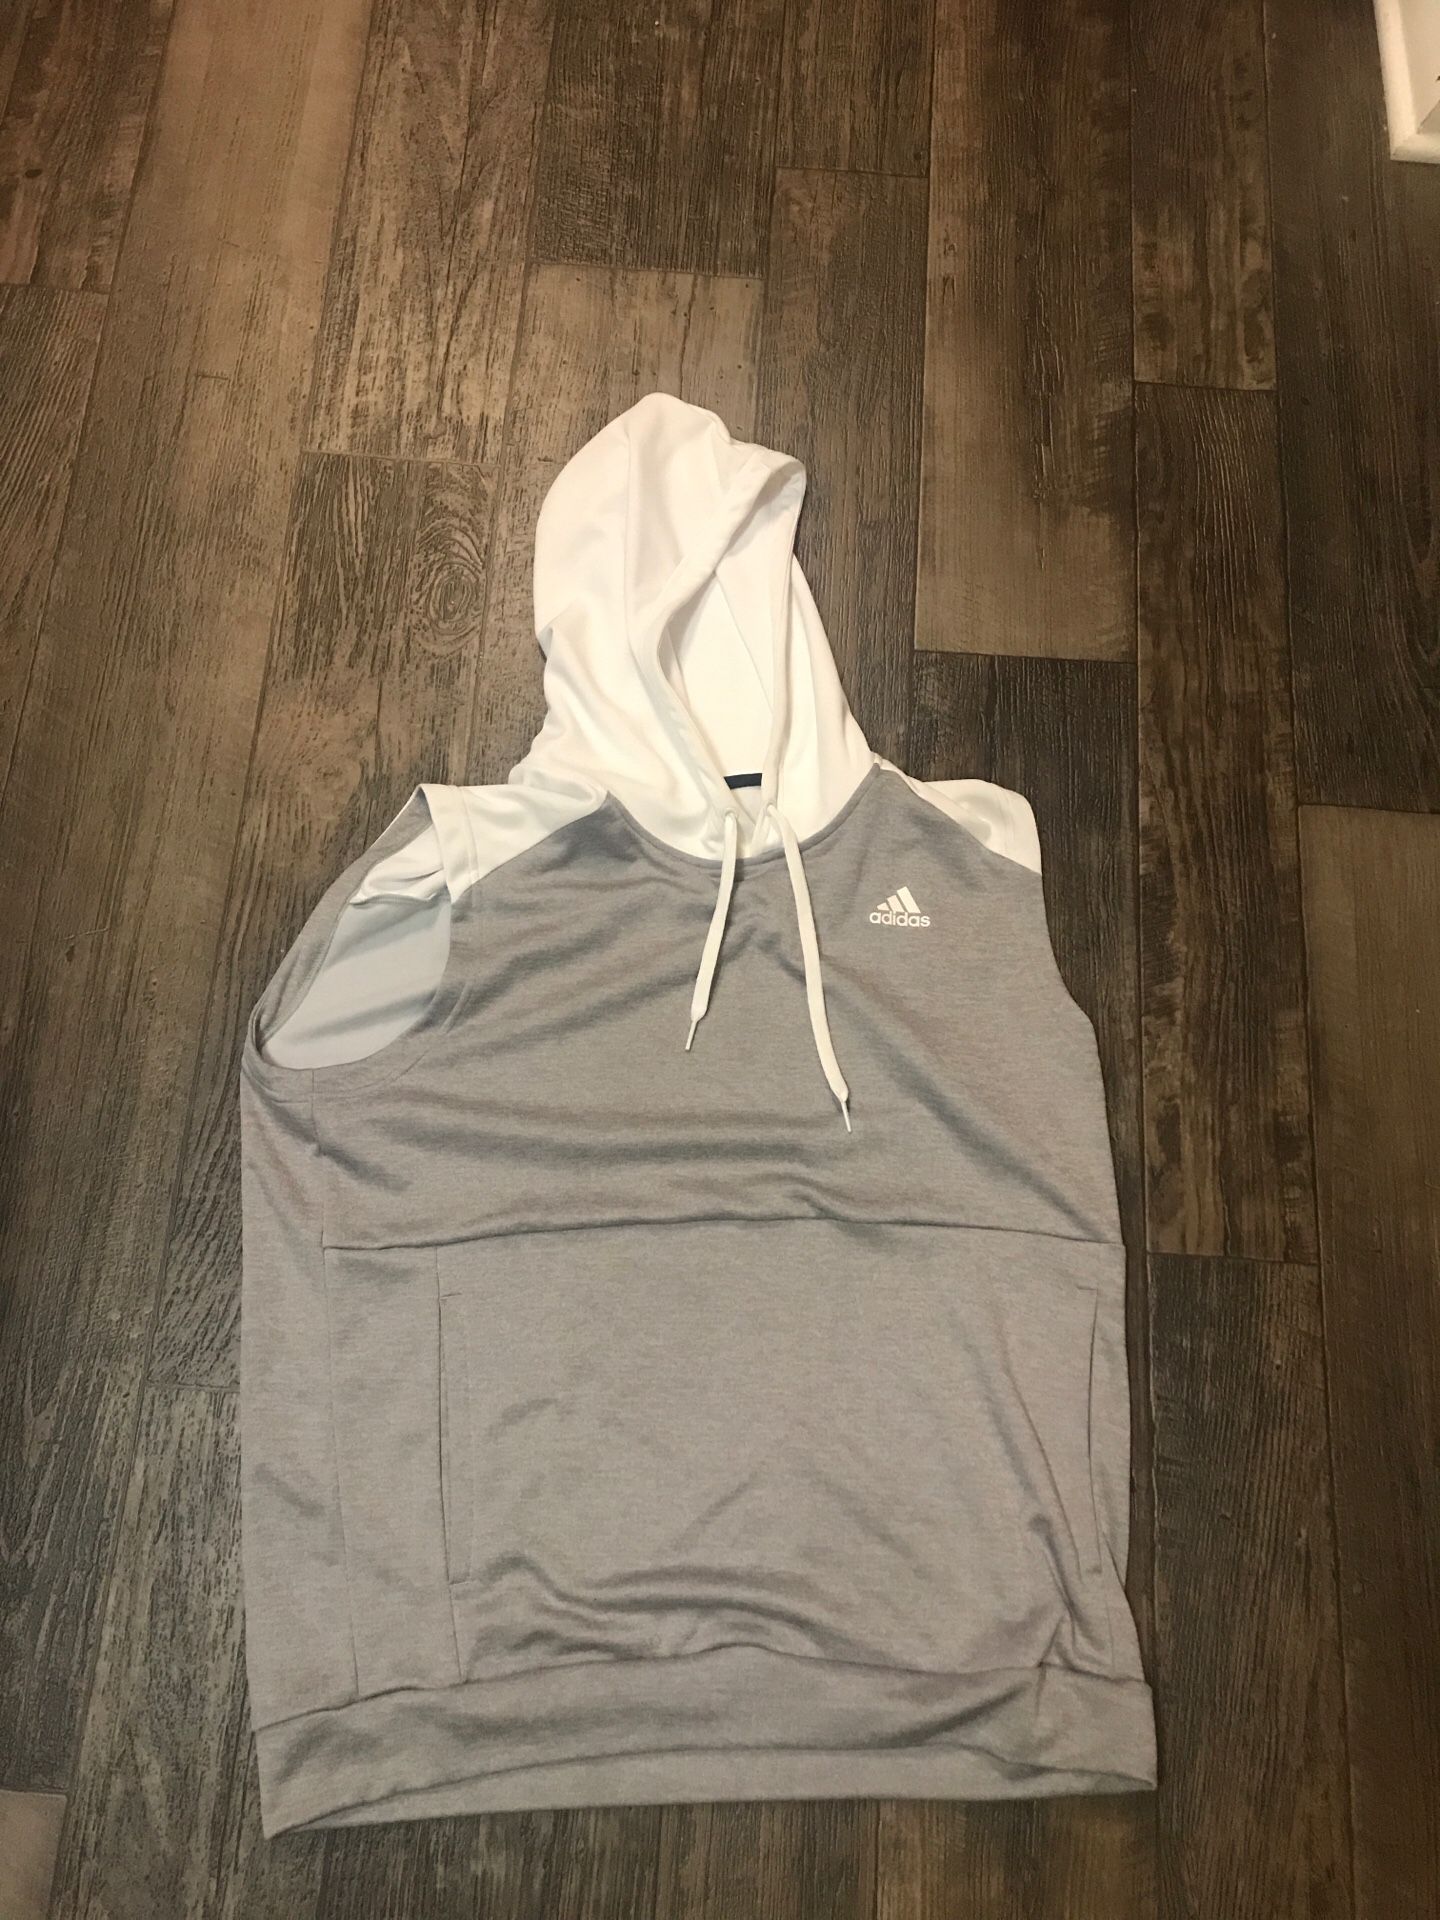 Adidas sleeveless hoodie (LG)